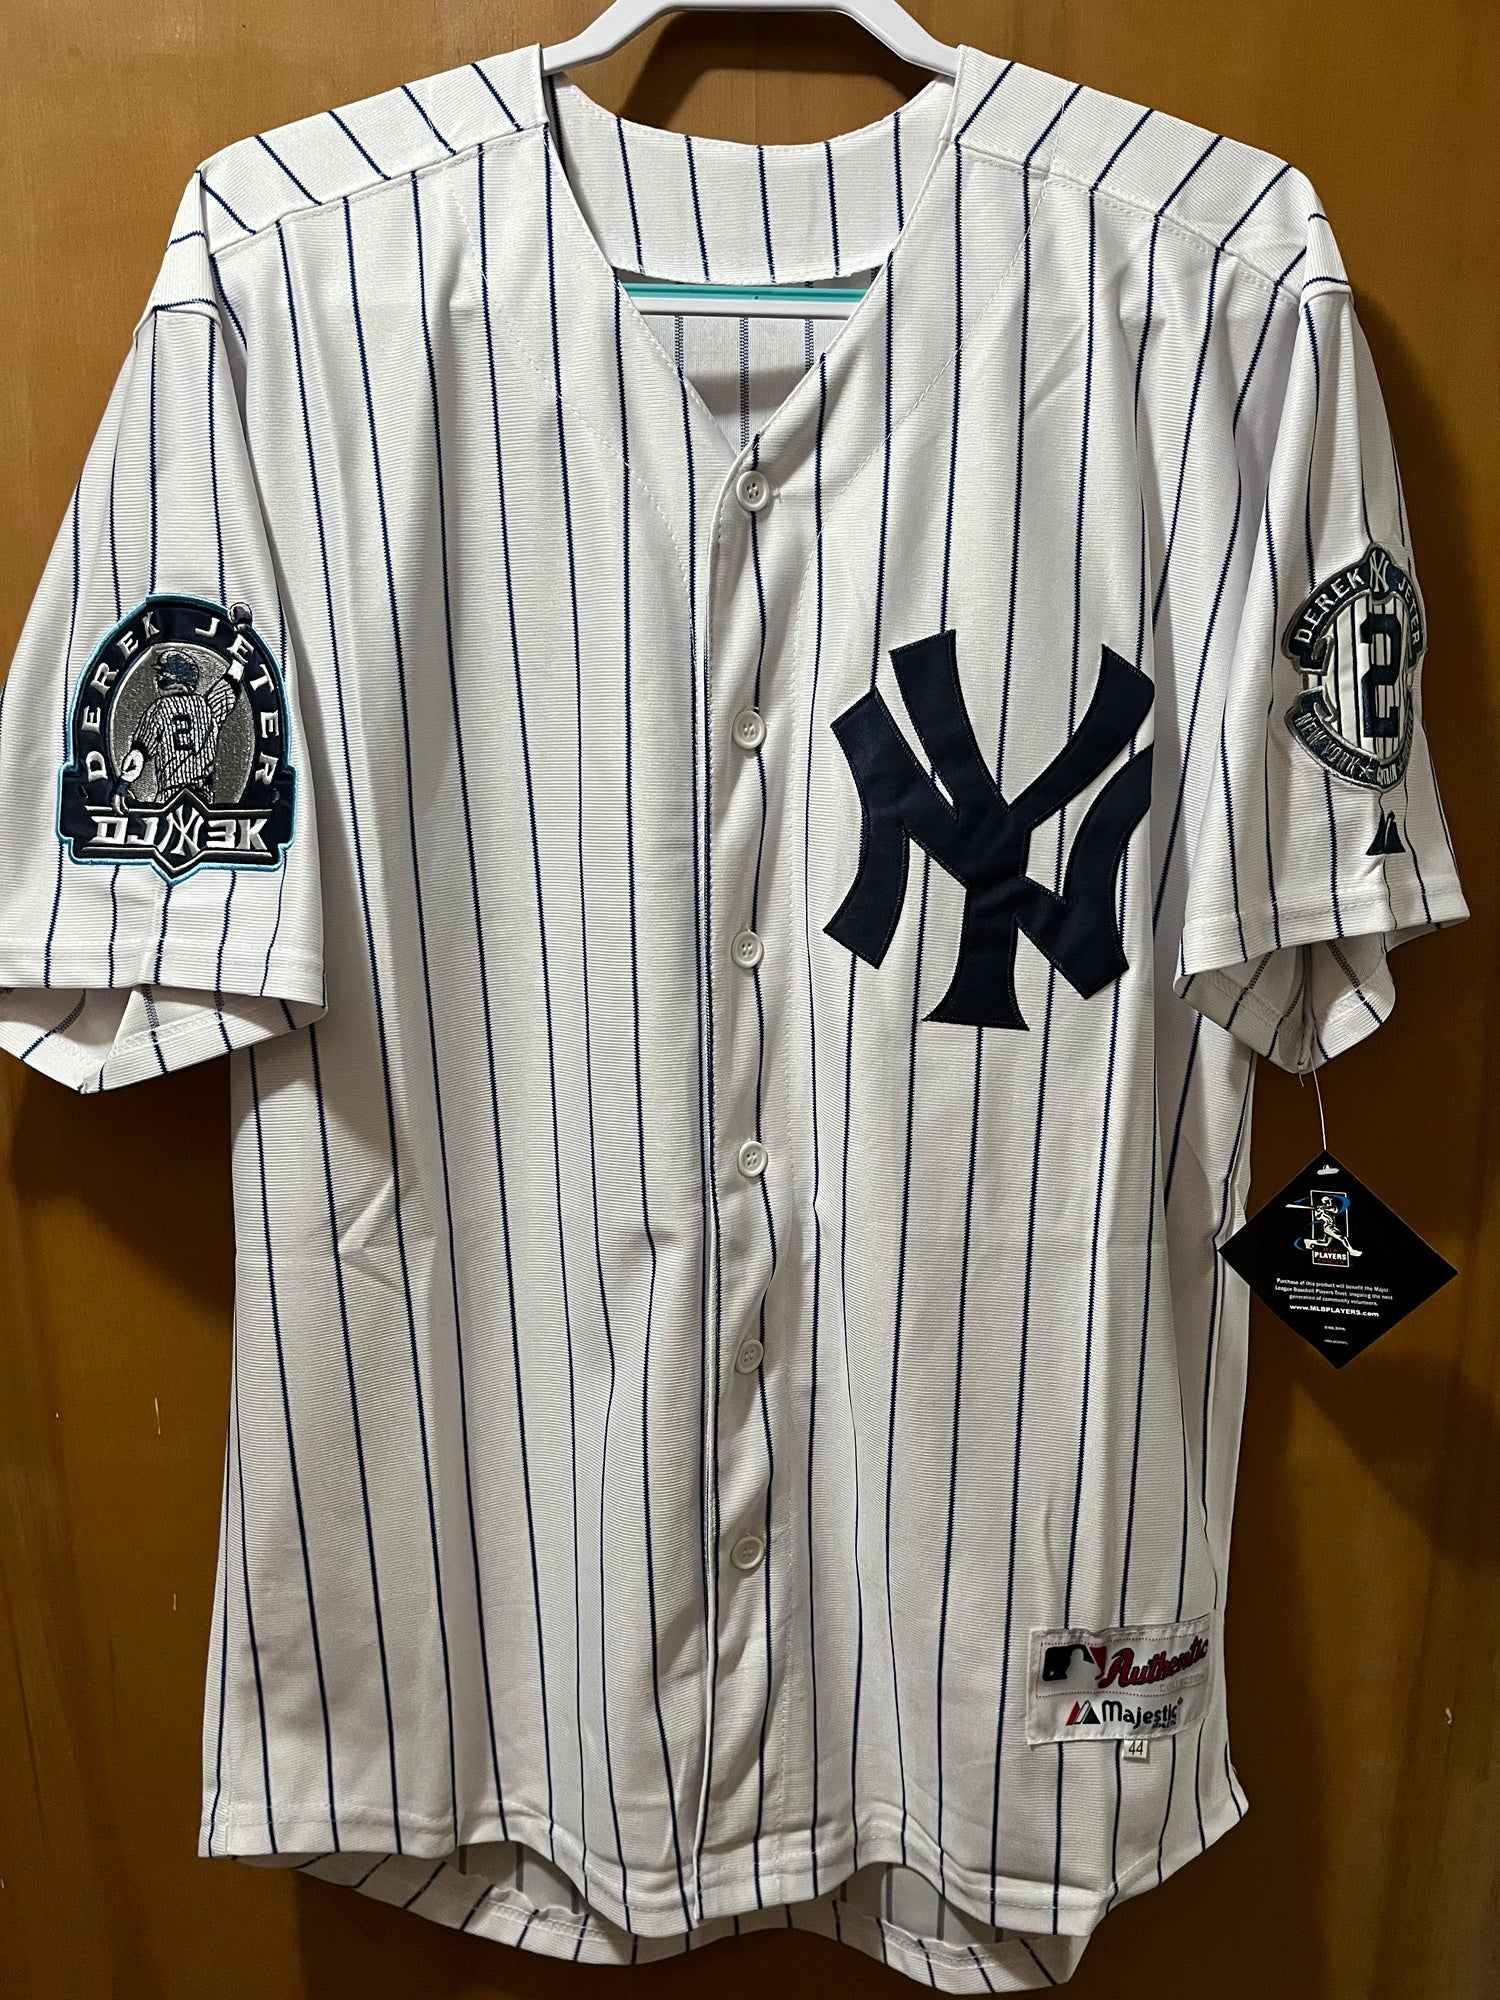 Derek Jeter #2 New York Yankees World Series Jersey Size 44 New